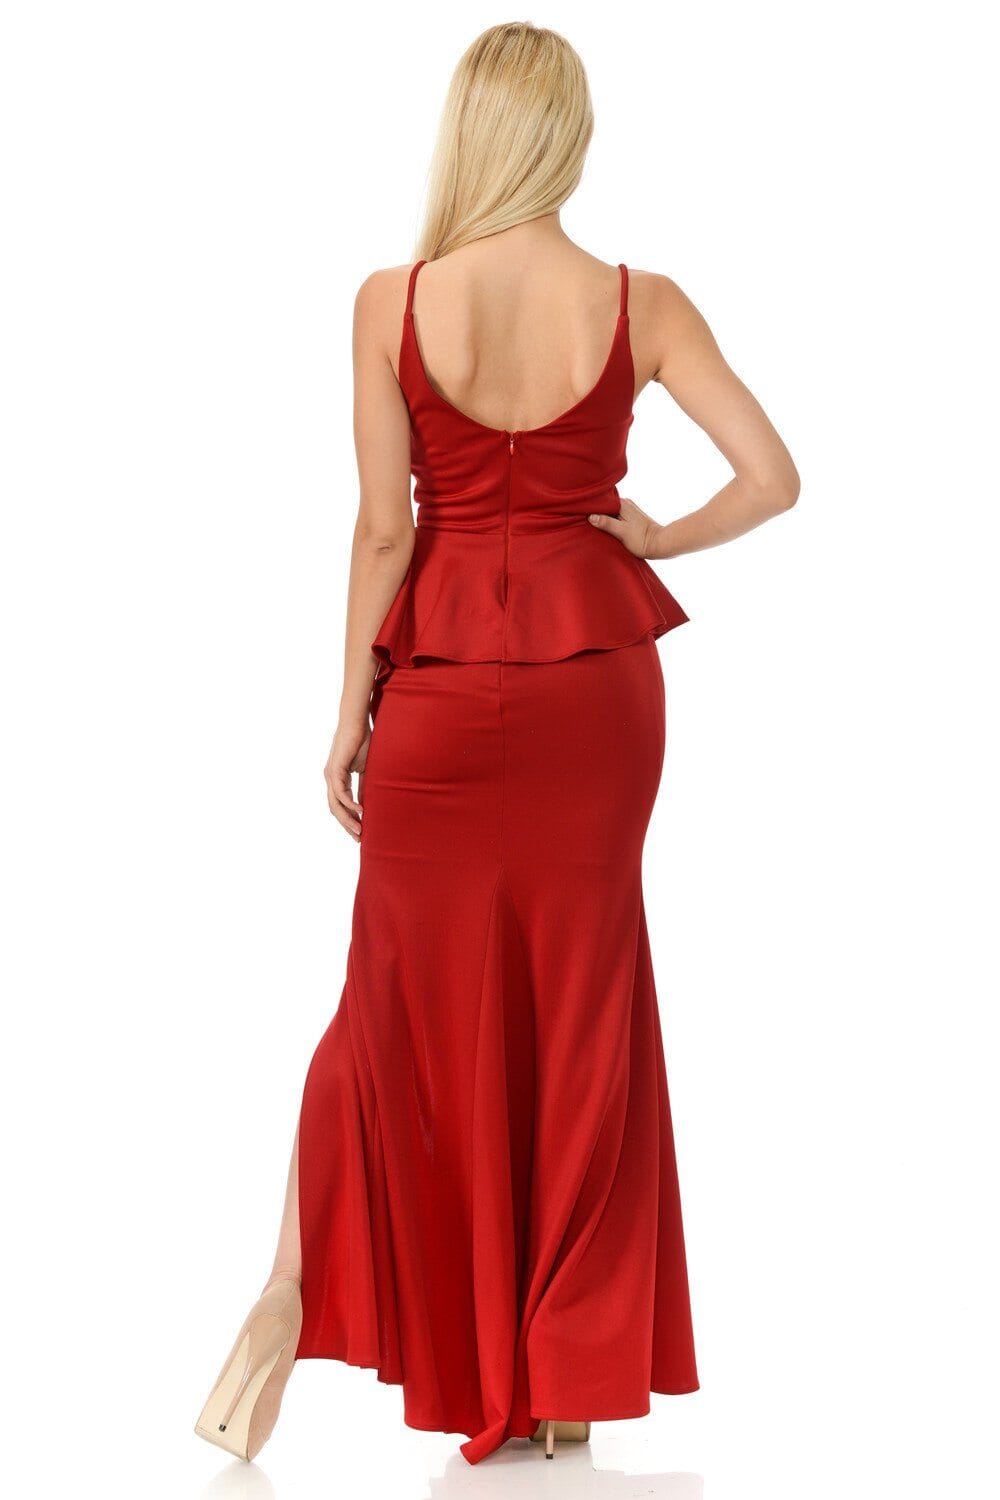 Long Pleated V-Neck Peplum Dress by Lenovia 5174-Long Formal Dresses-ABC Fashion